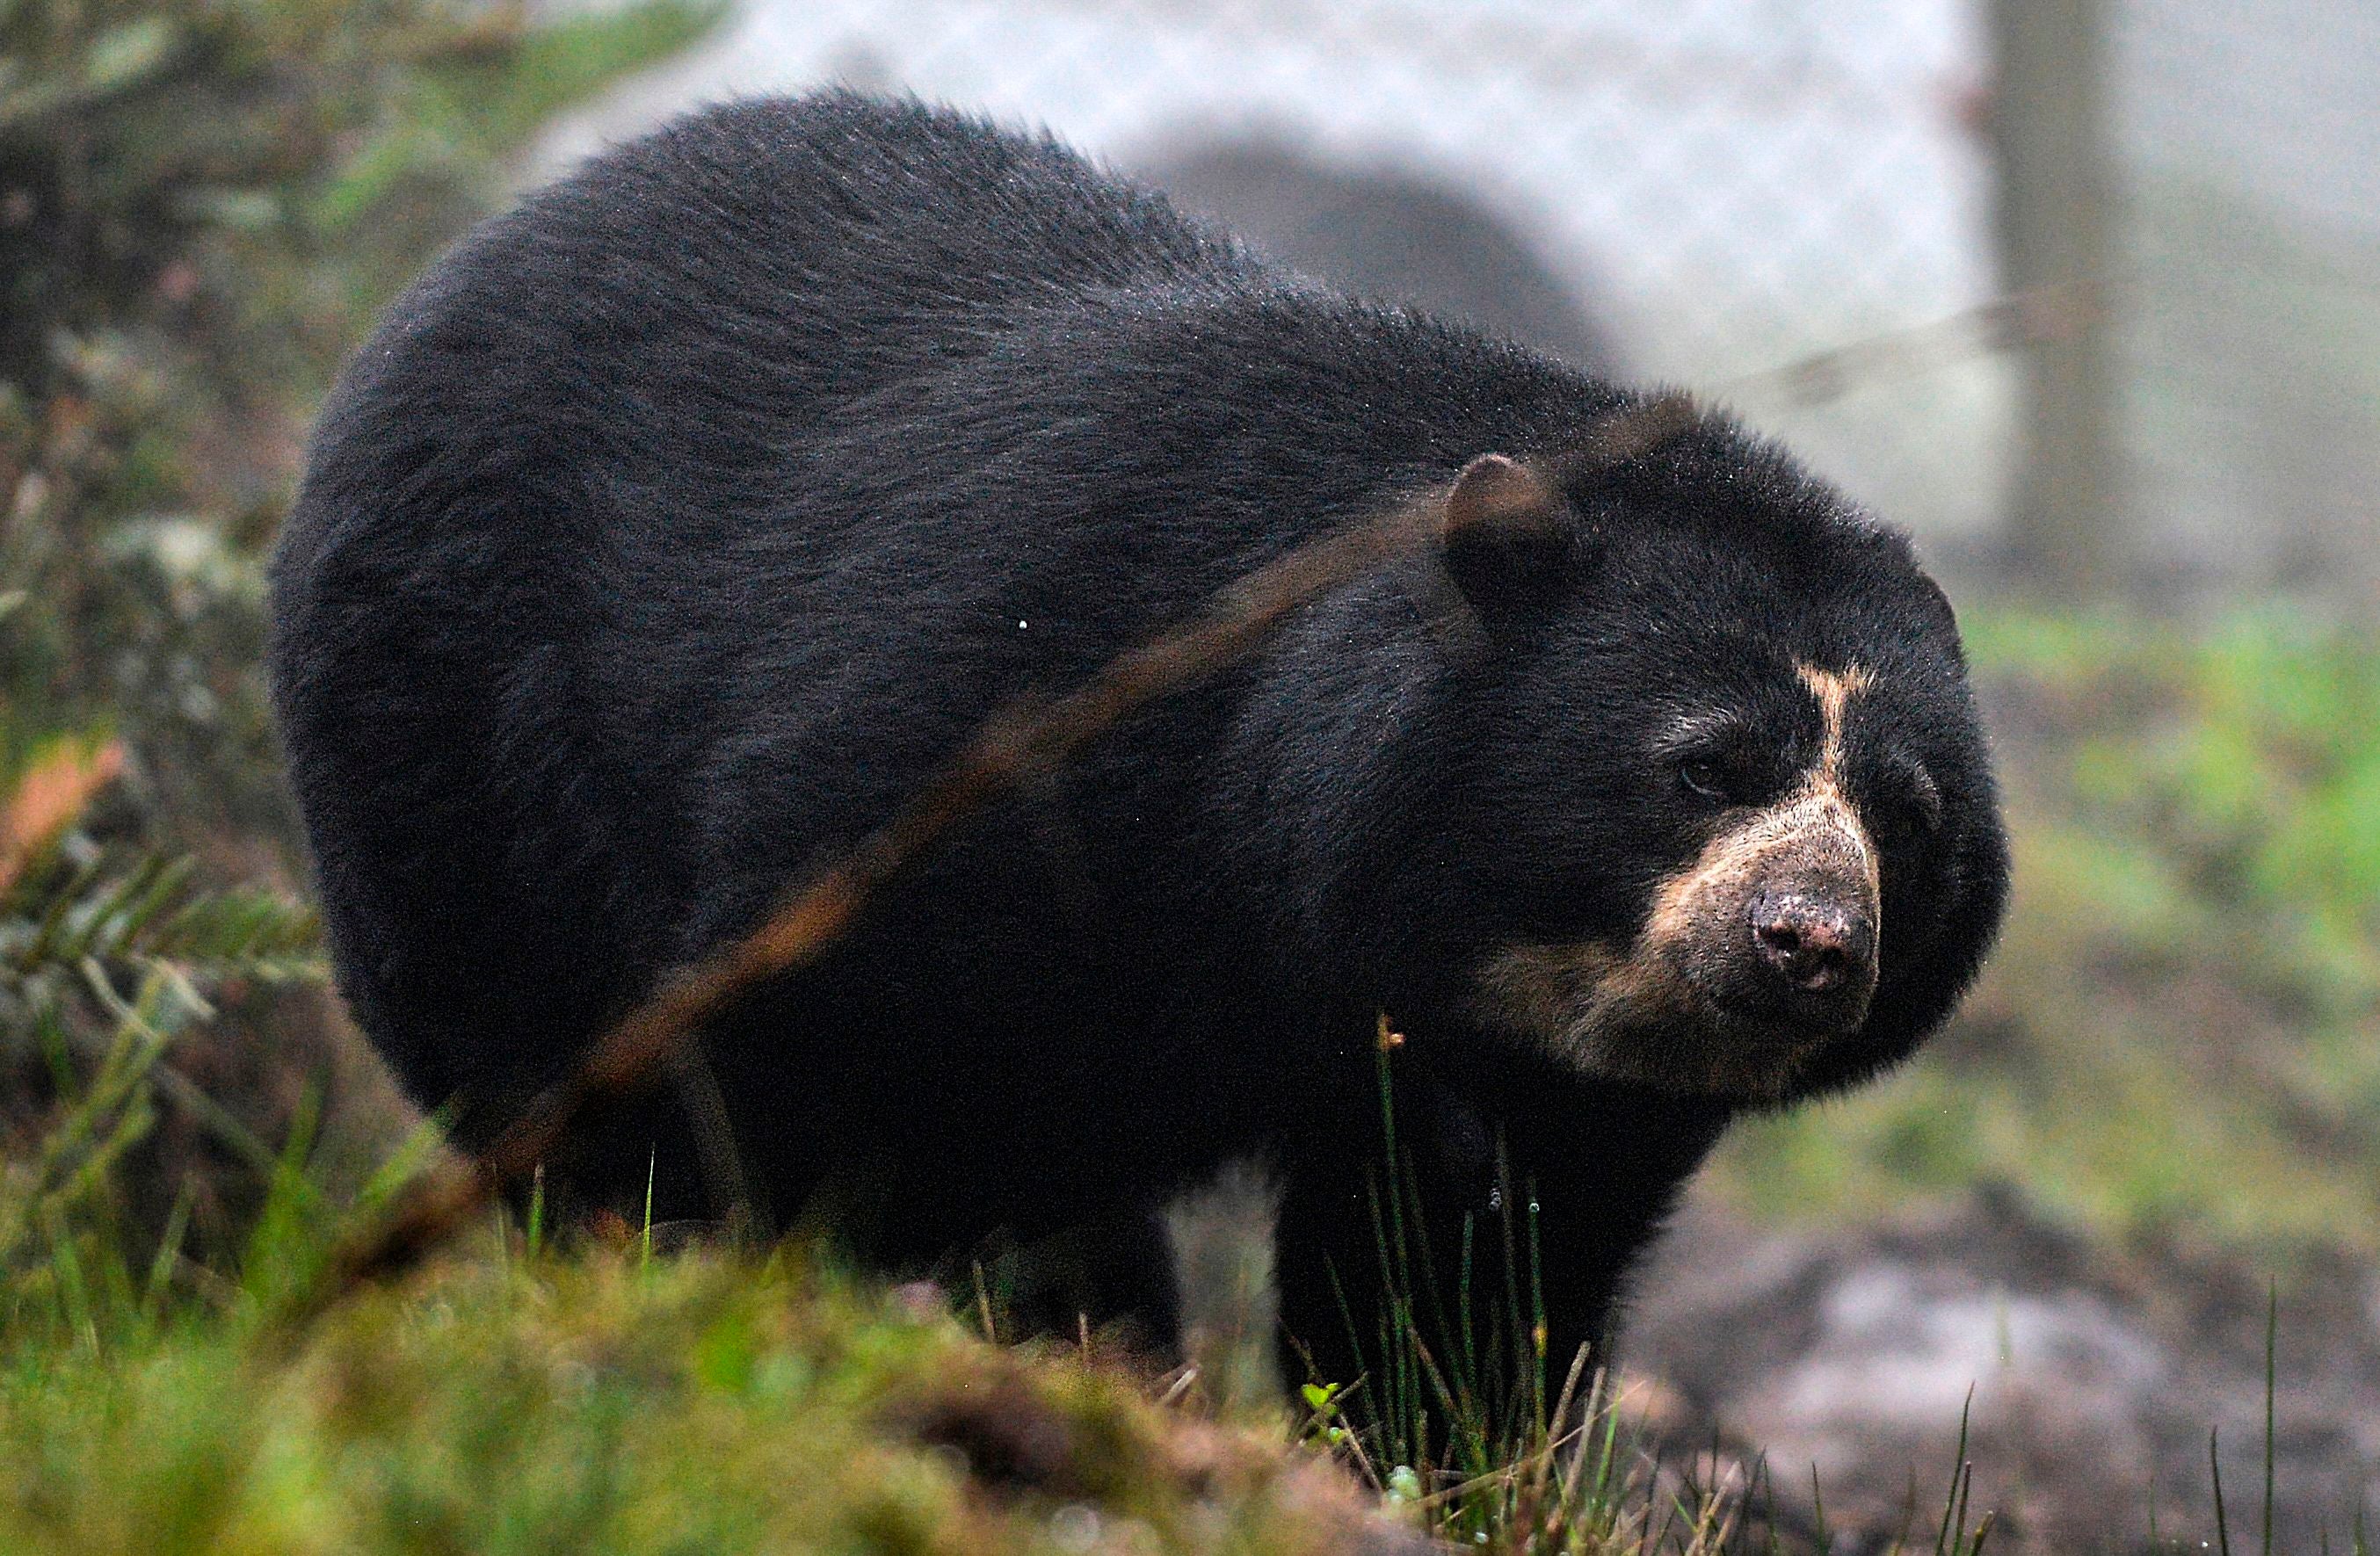 Andean bears are among the wildlife already under threat in Ecuador